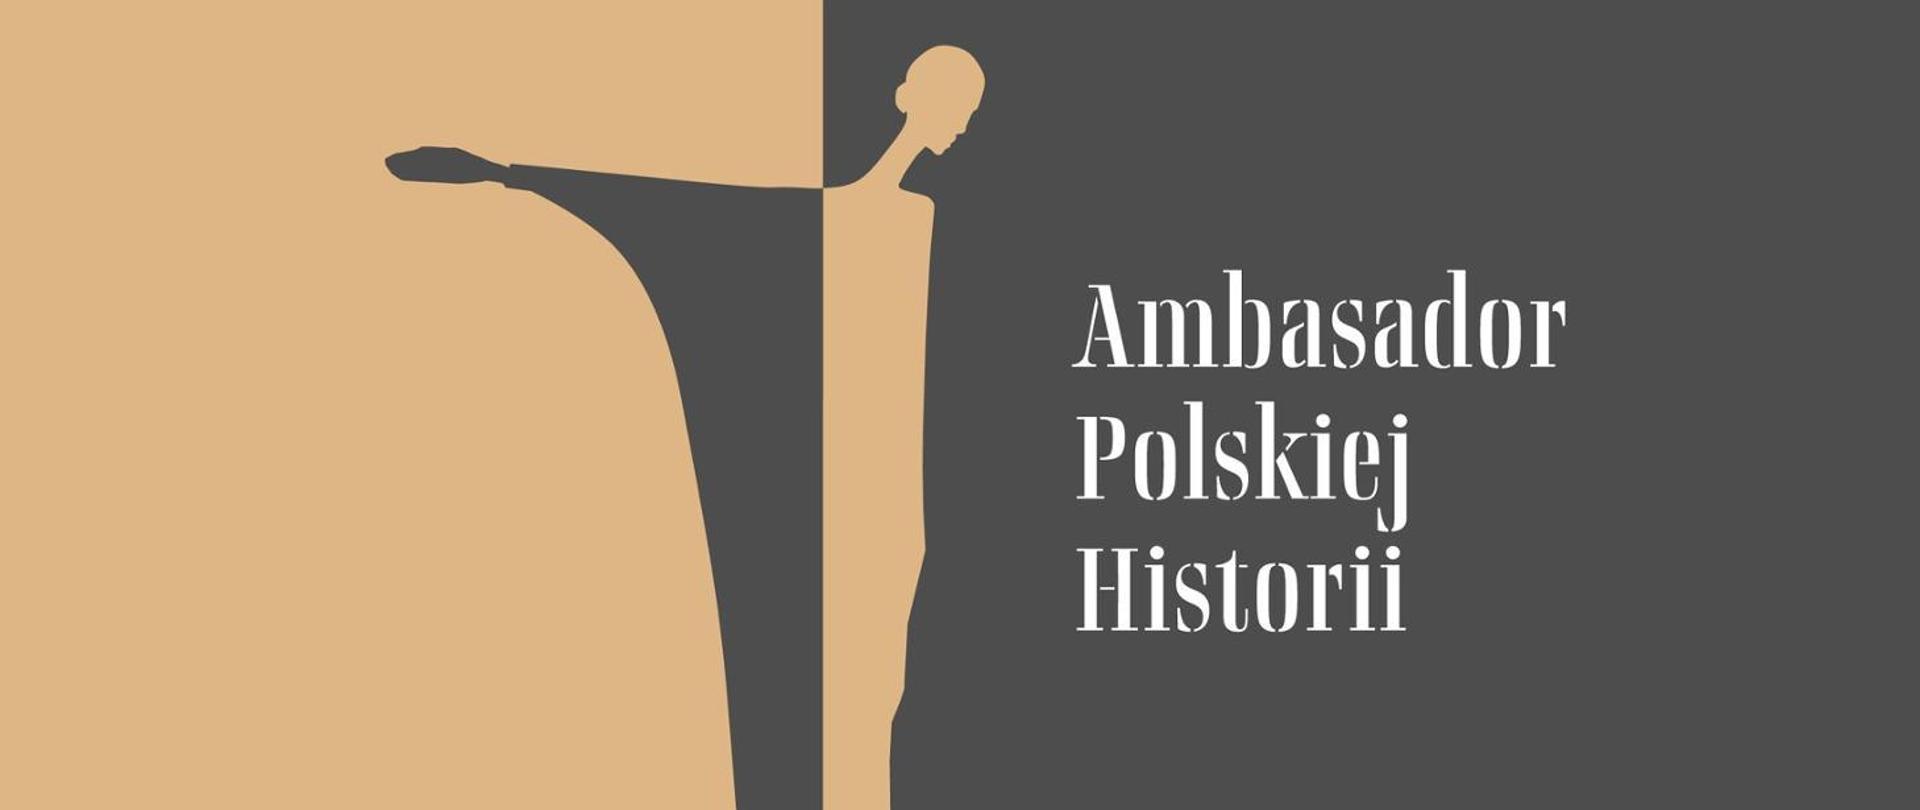 Ambasador Polskiej Historii - nagroda IPN dla osób i organizacji spoza Polski